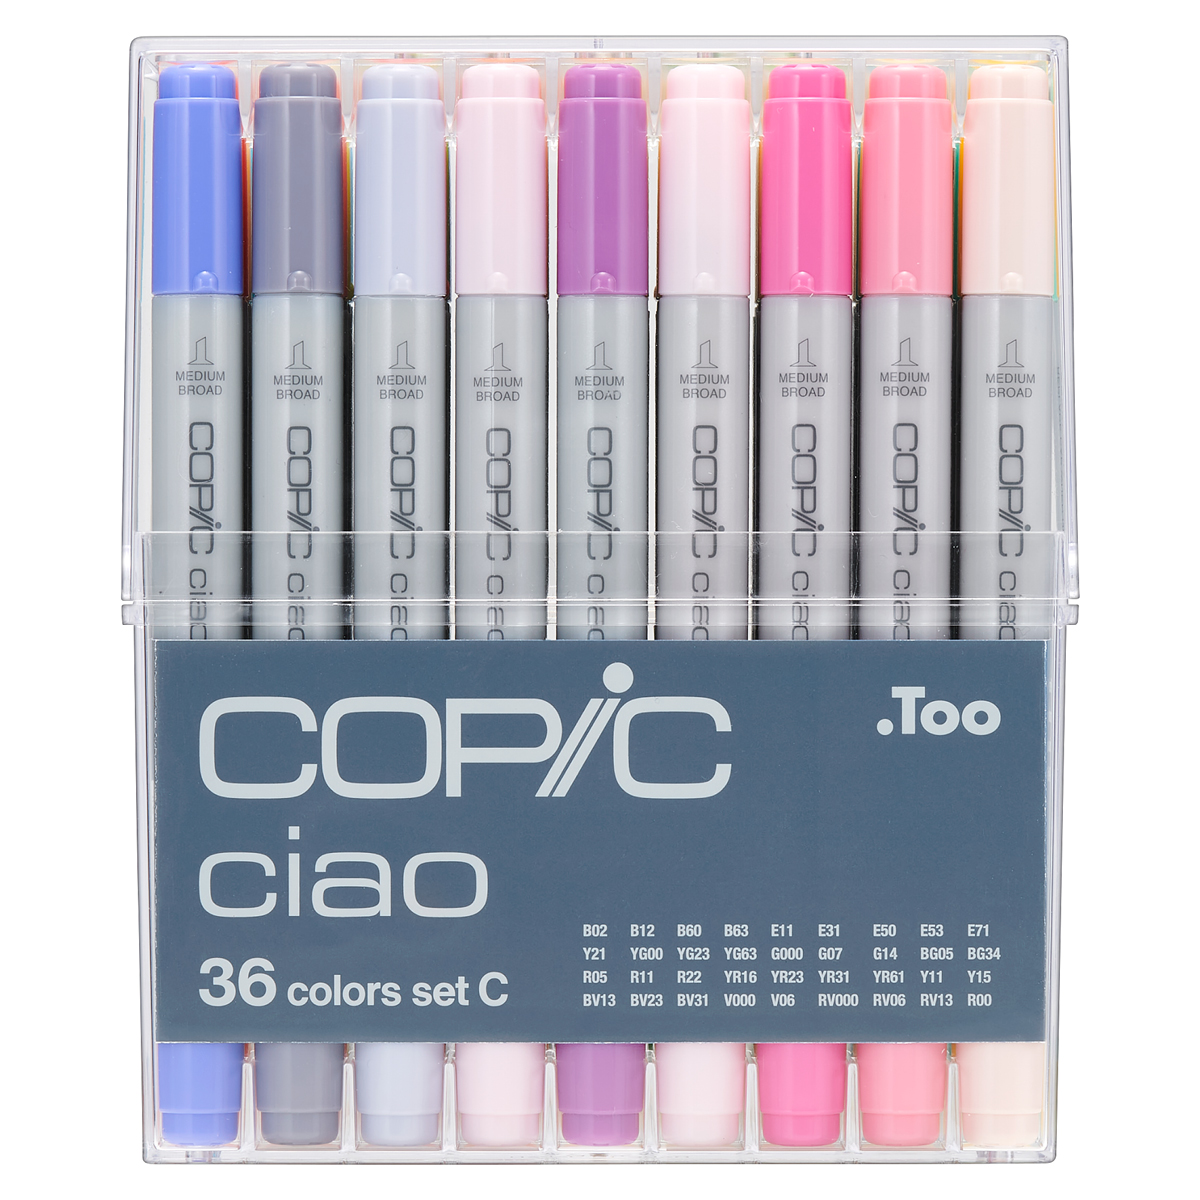 Ciao 36-set C in the group Pens / Artist Pens / Felt Tip Pens at Pen Store (103309)